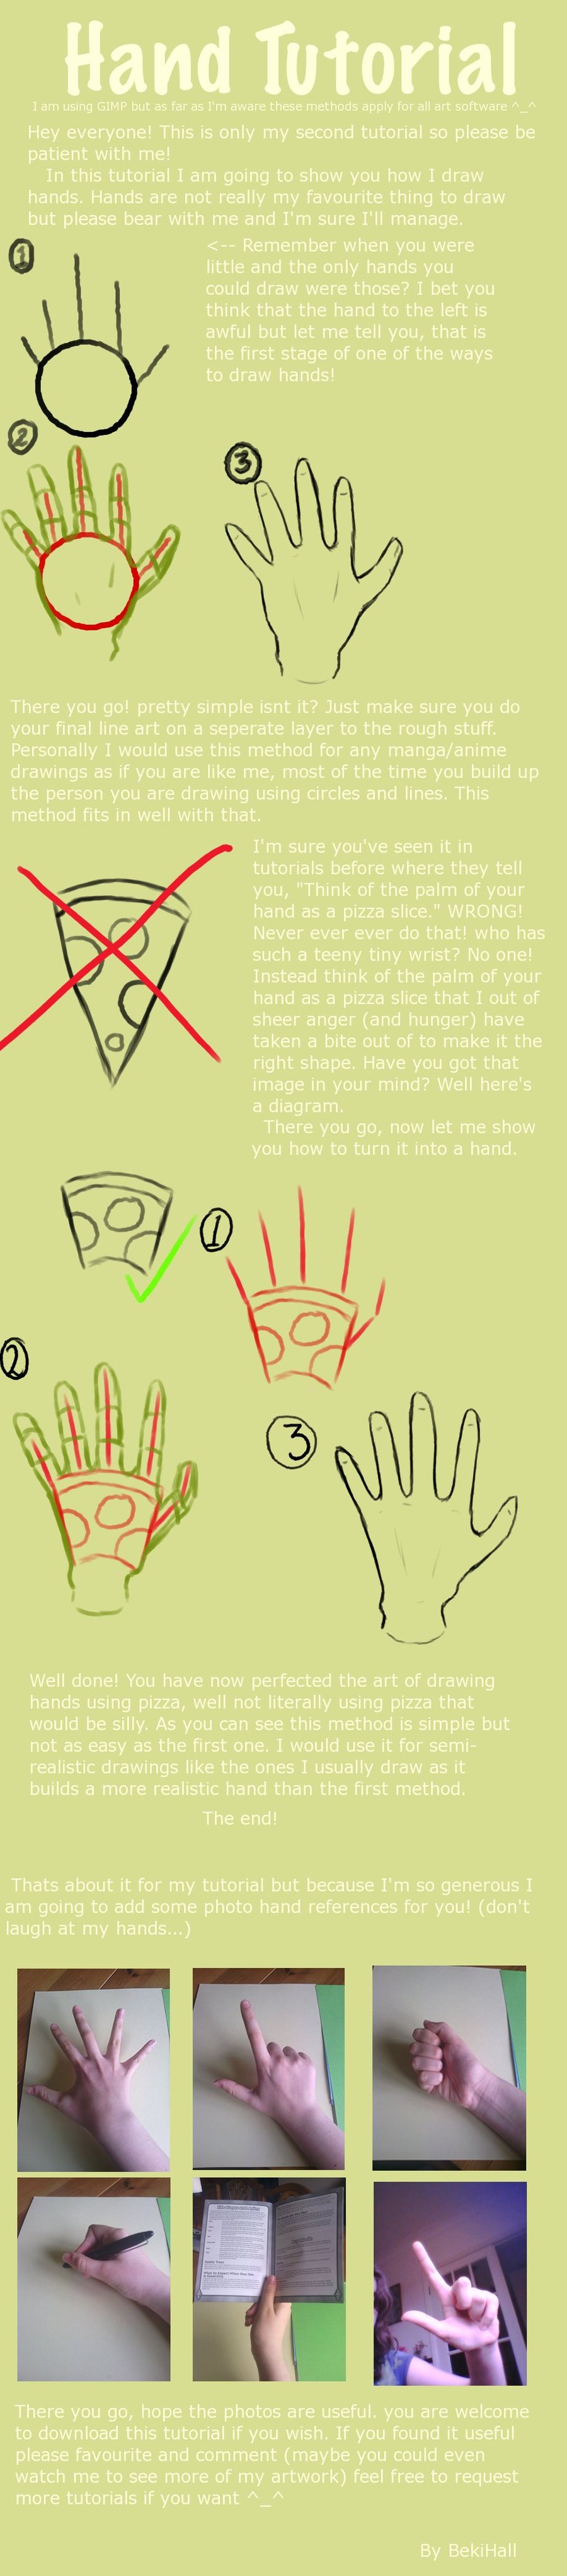 tut jak rysować mangę - hand_tutorial_by_bekihall-d69p97v.jpg